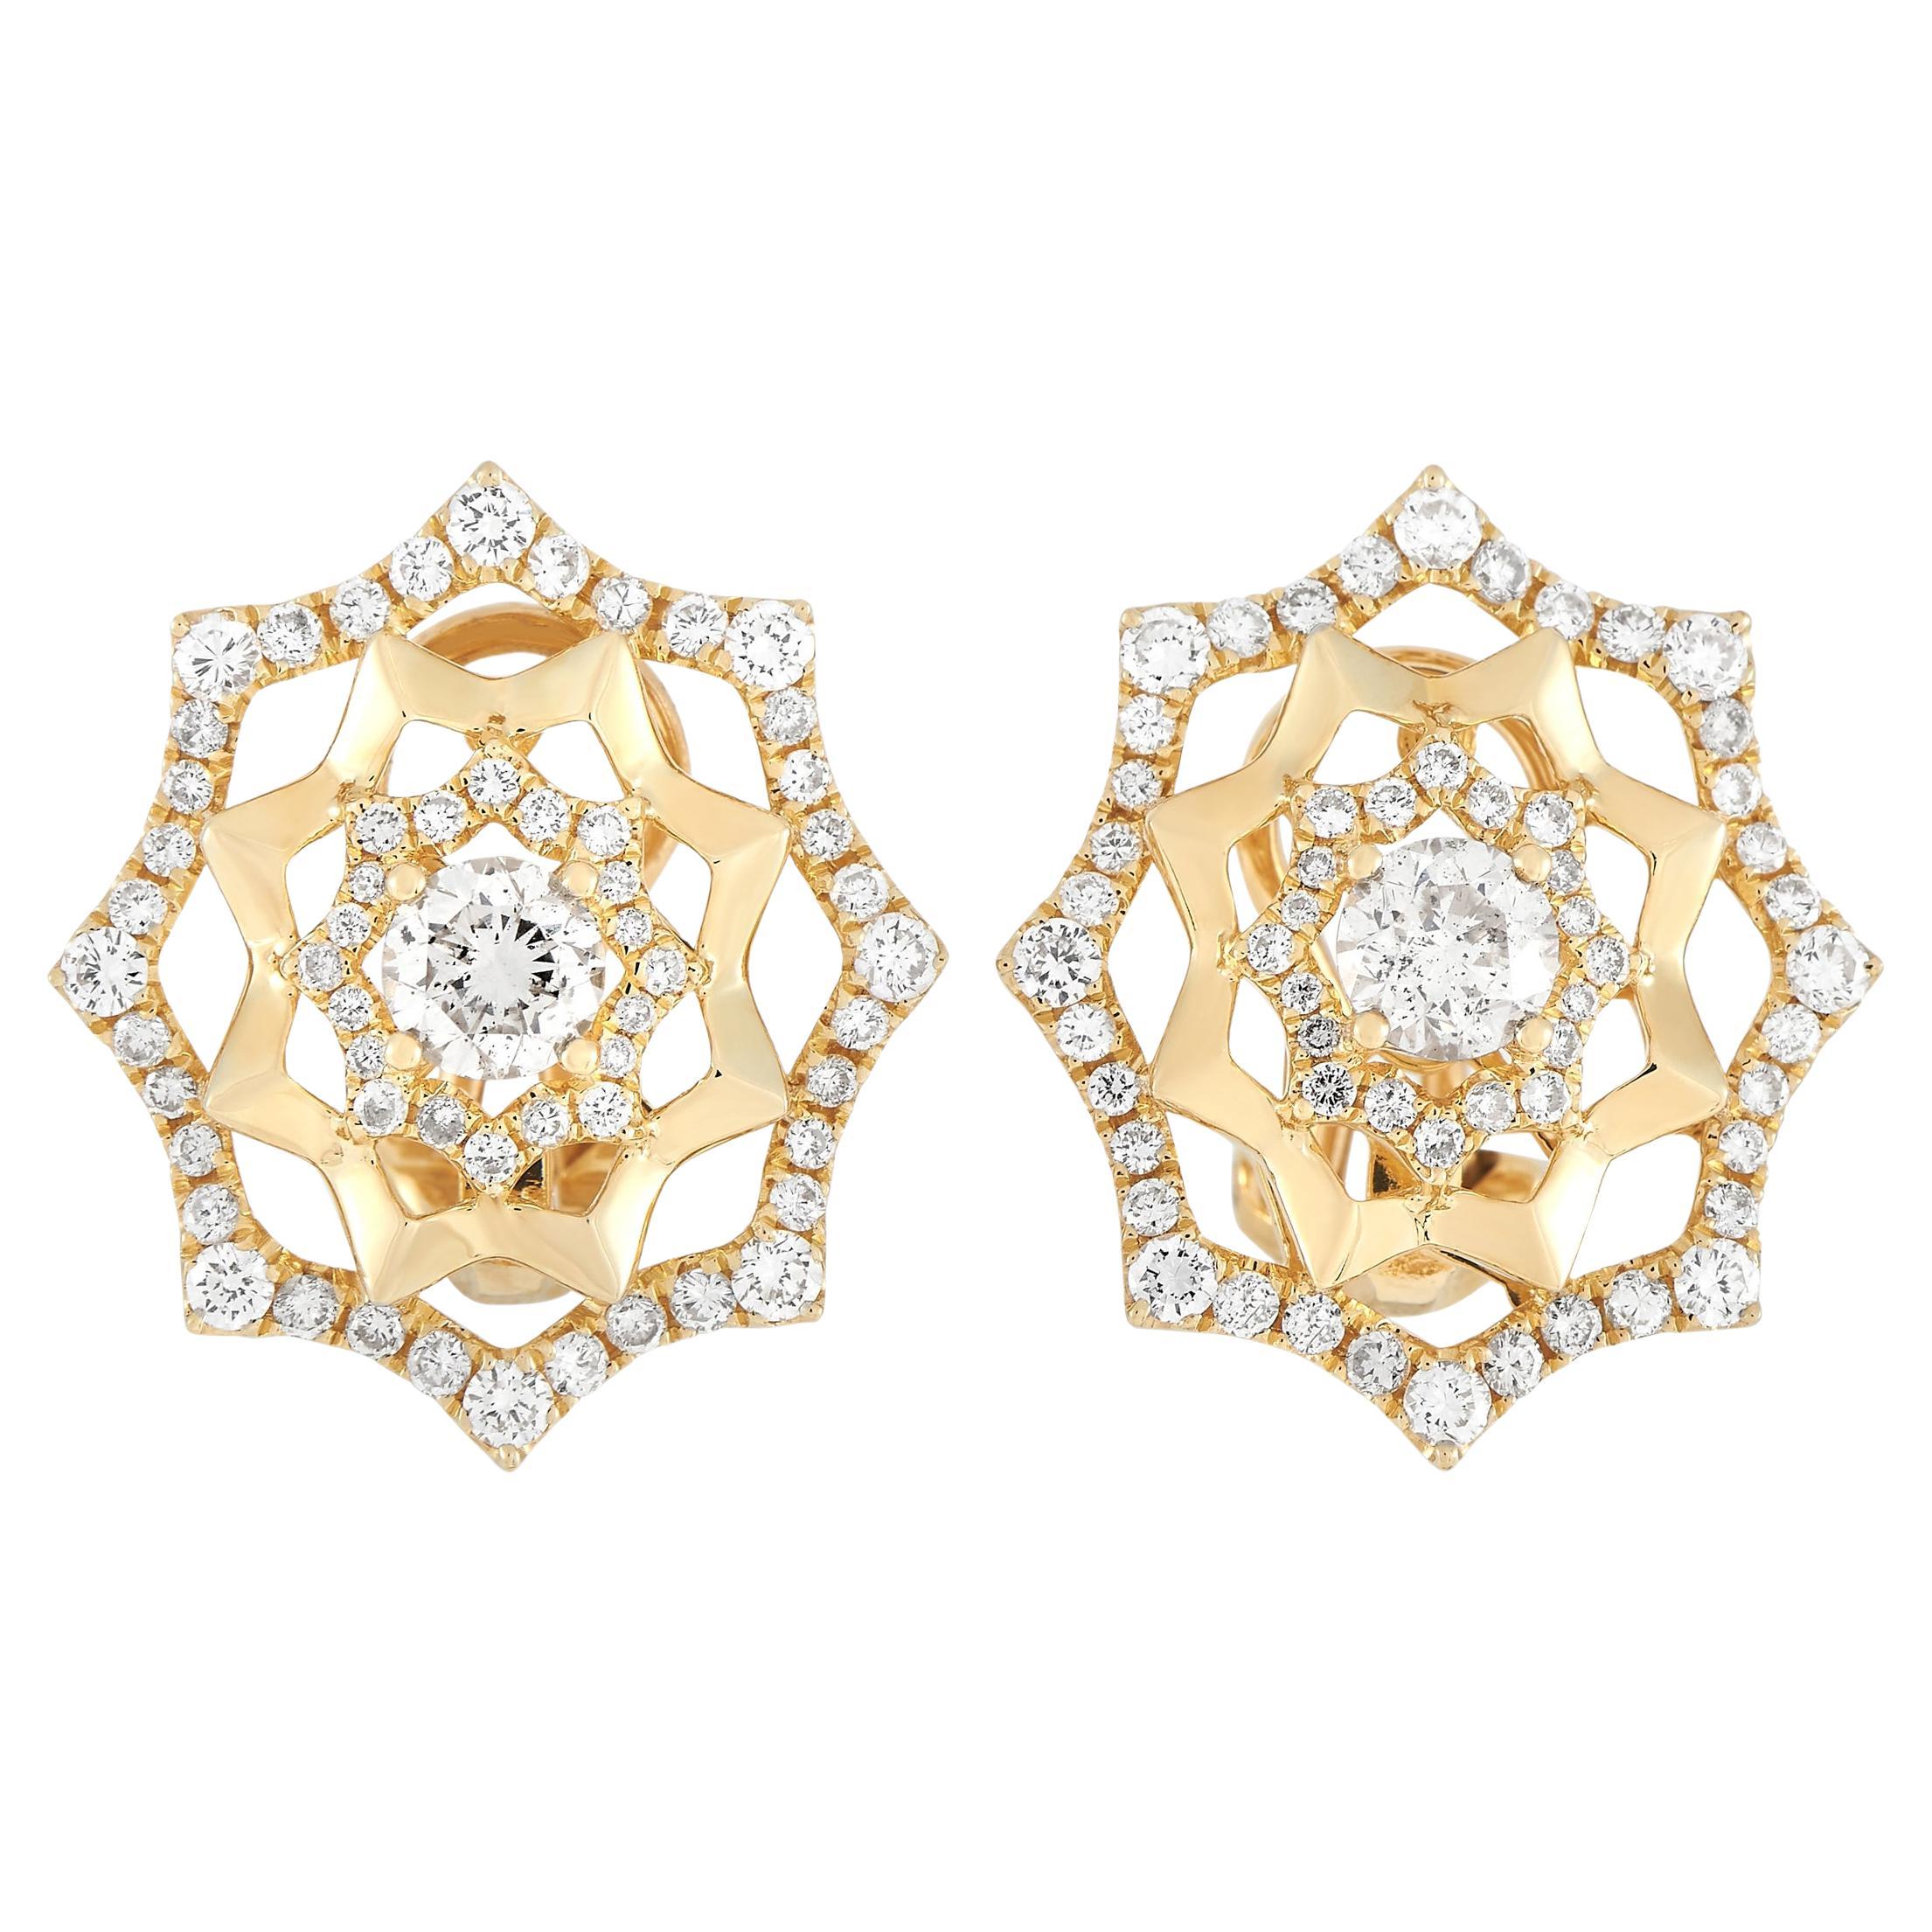 LB Exclusive 18k Yellow 2.40 Carat Diamond Earrings